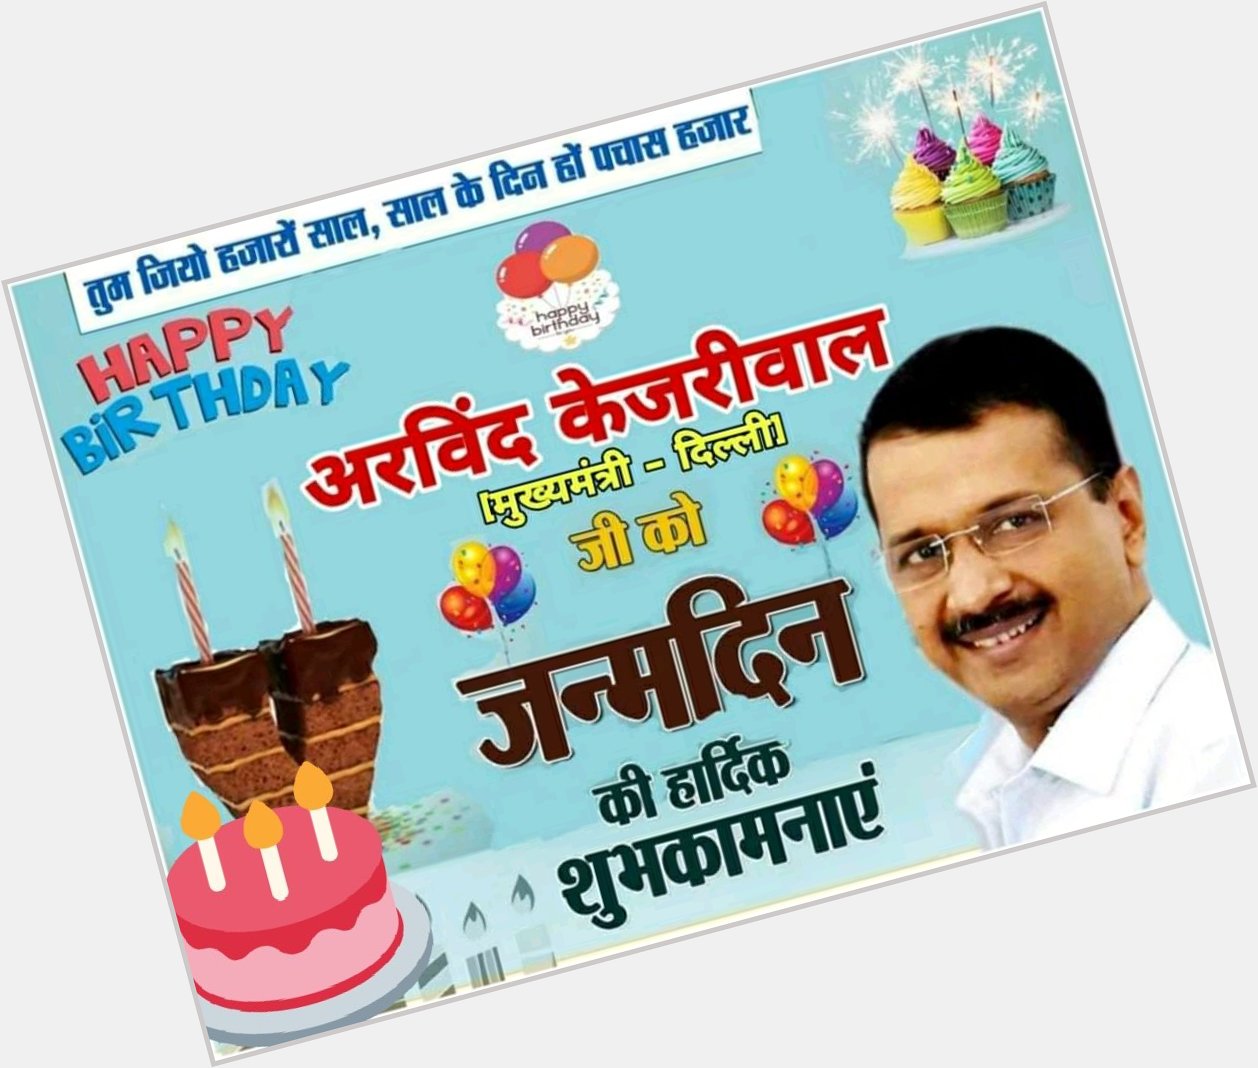   Happy Birthday Hon\ble CM Mr. Arvind Kejriwal Ji.  May uh live a long and happy life 